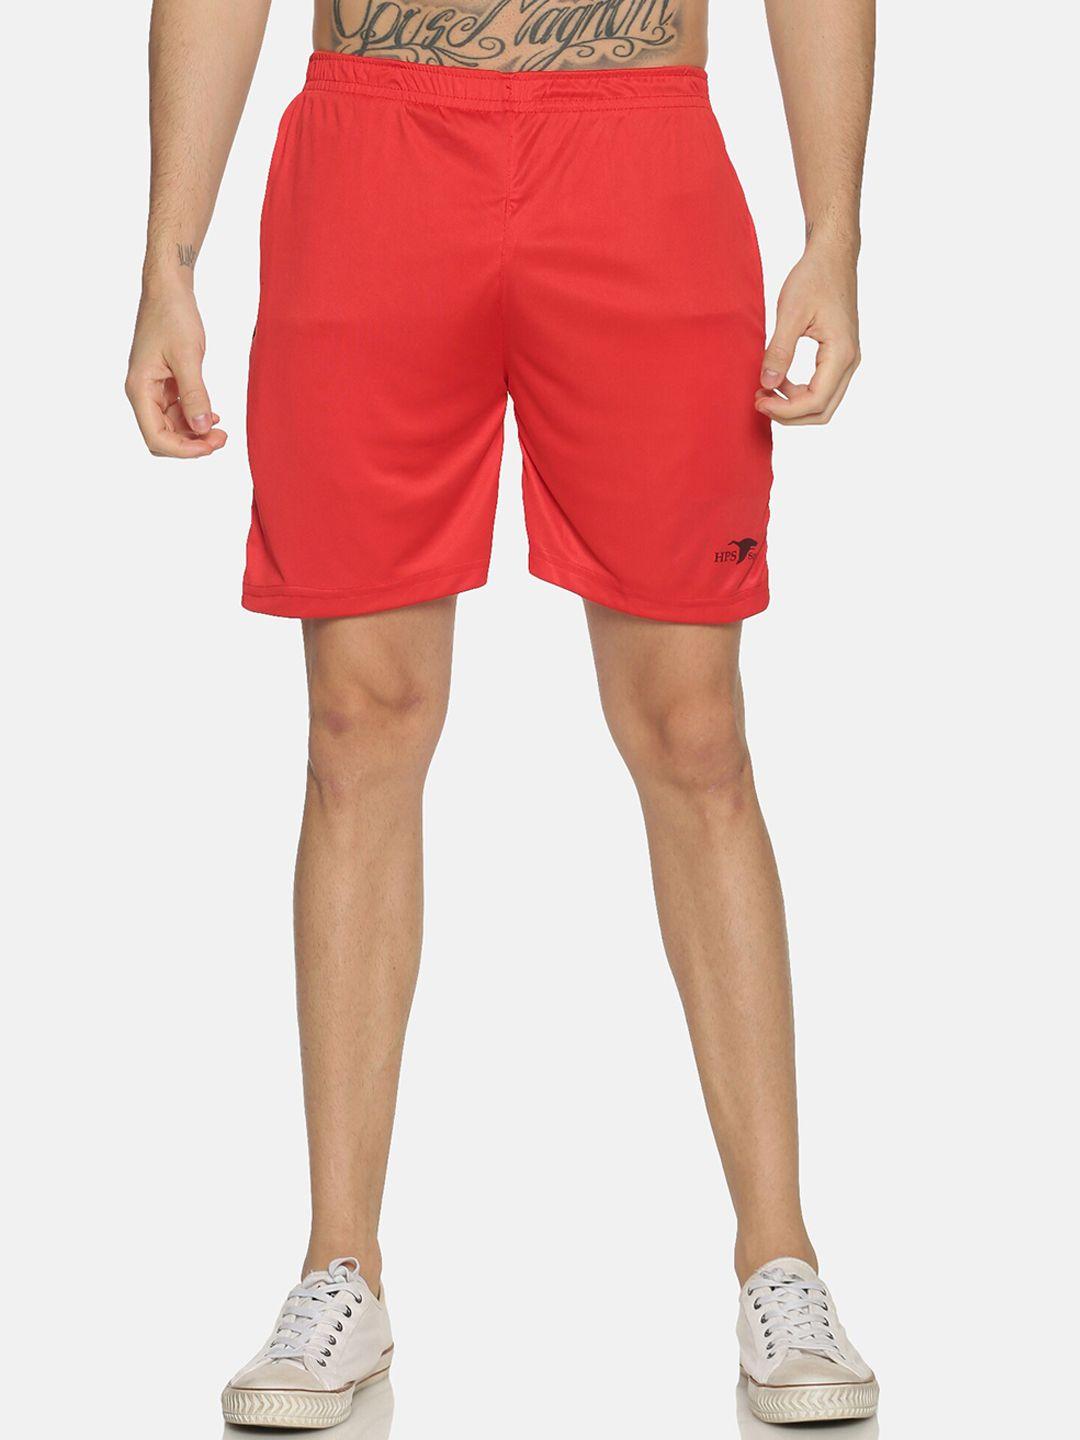 hps sports men red sports shorts